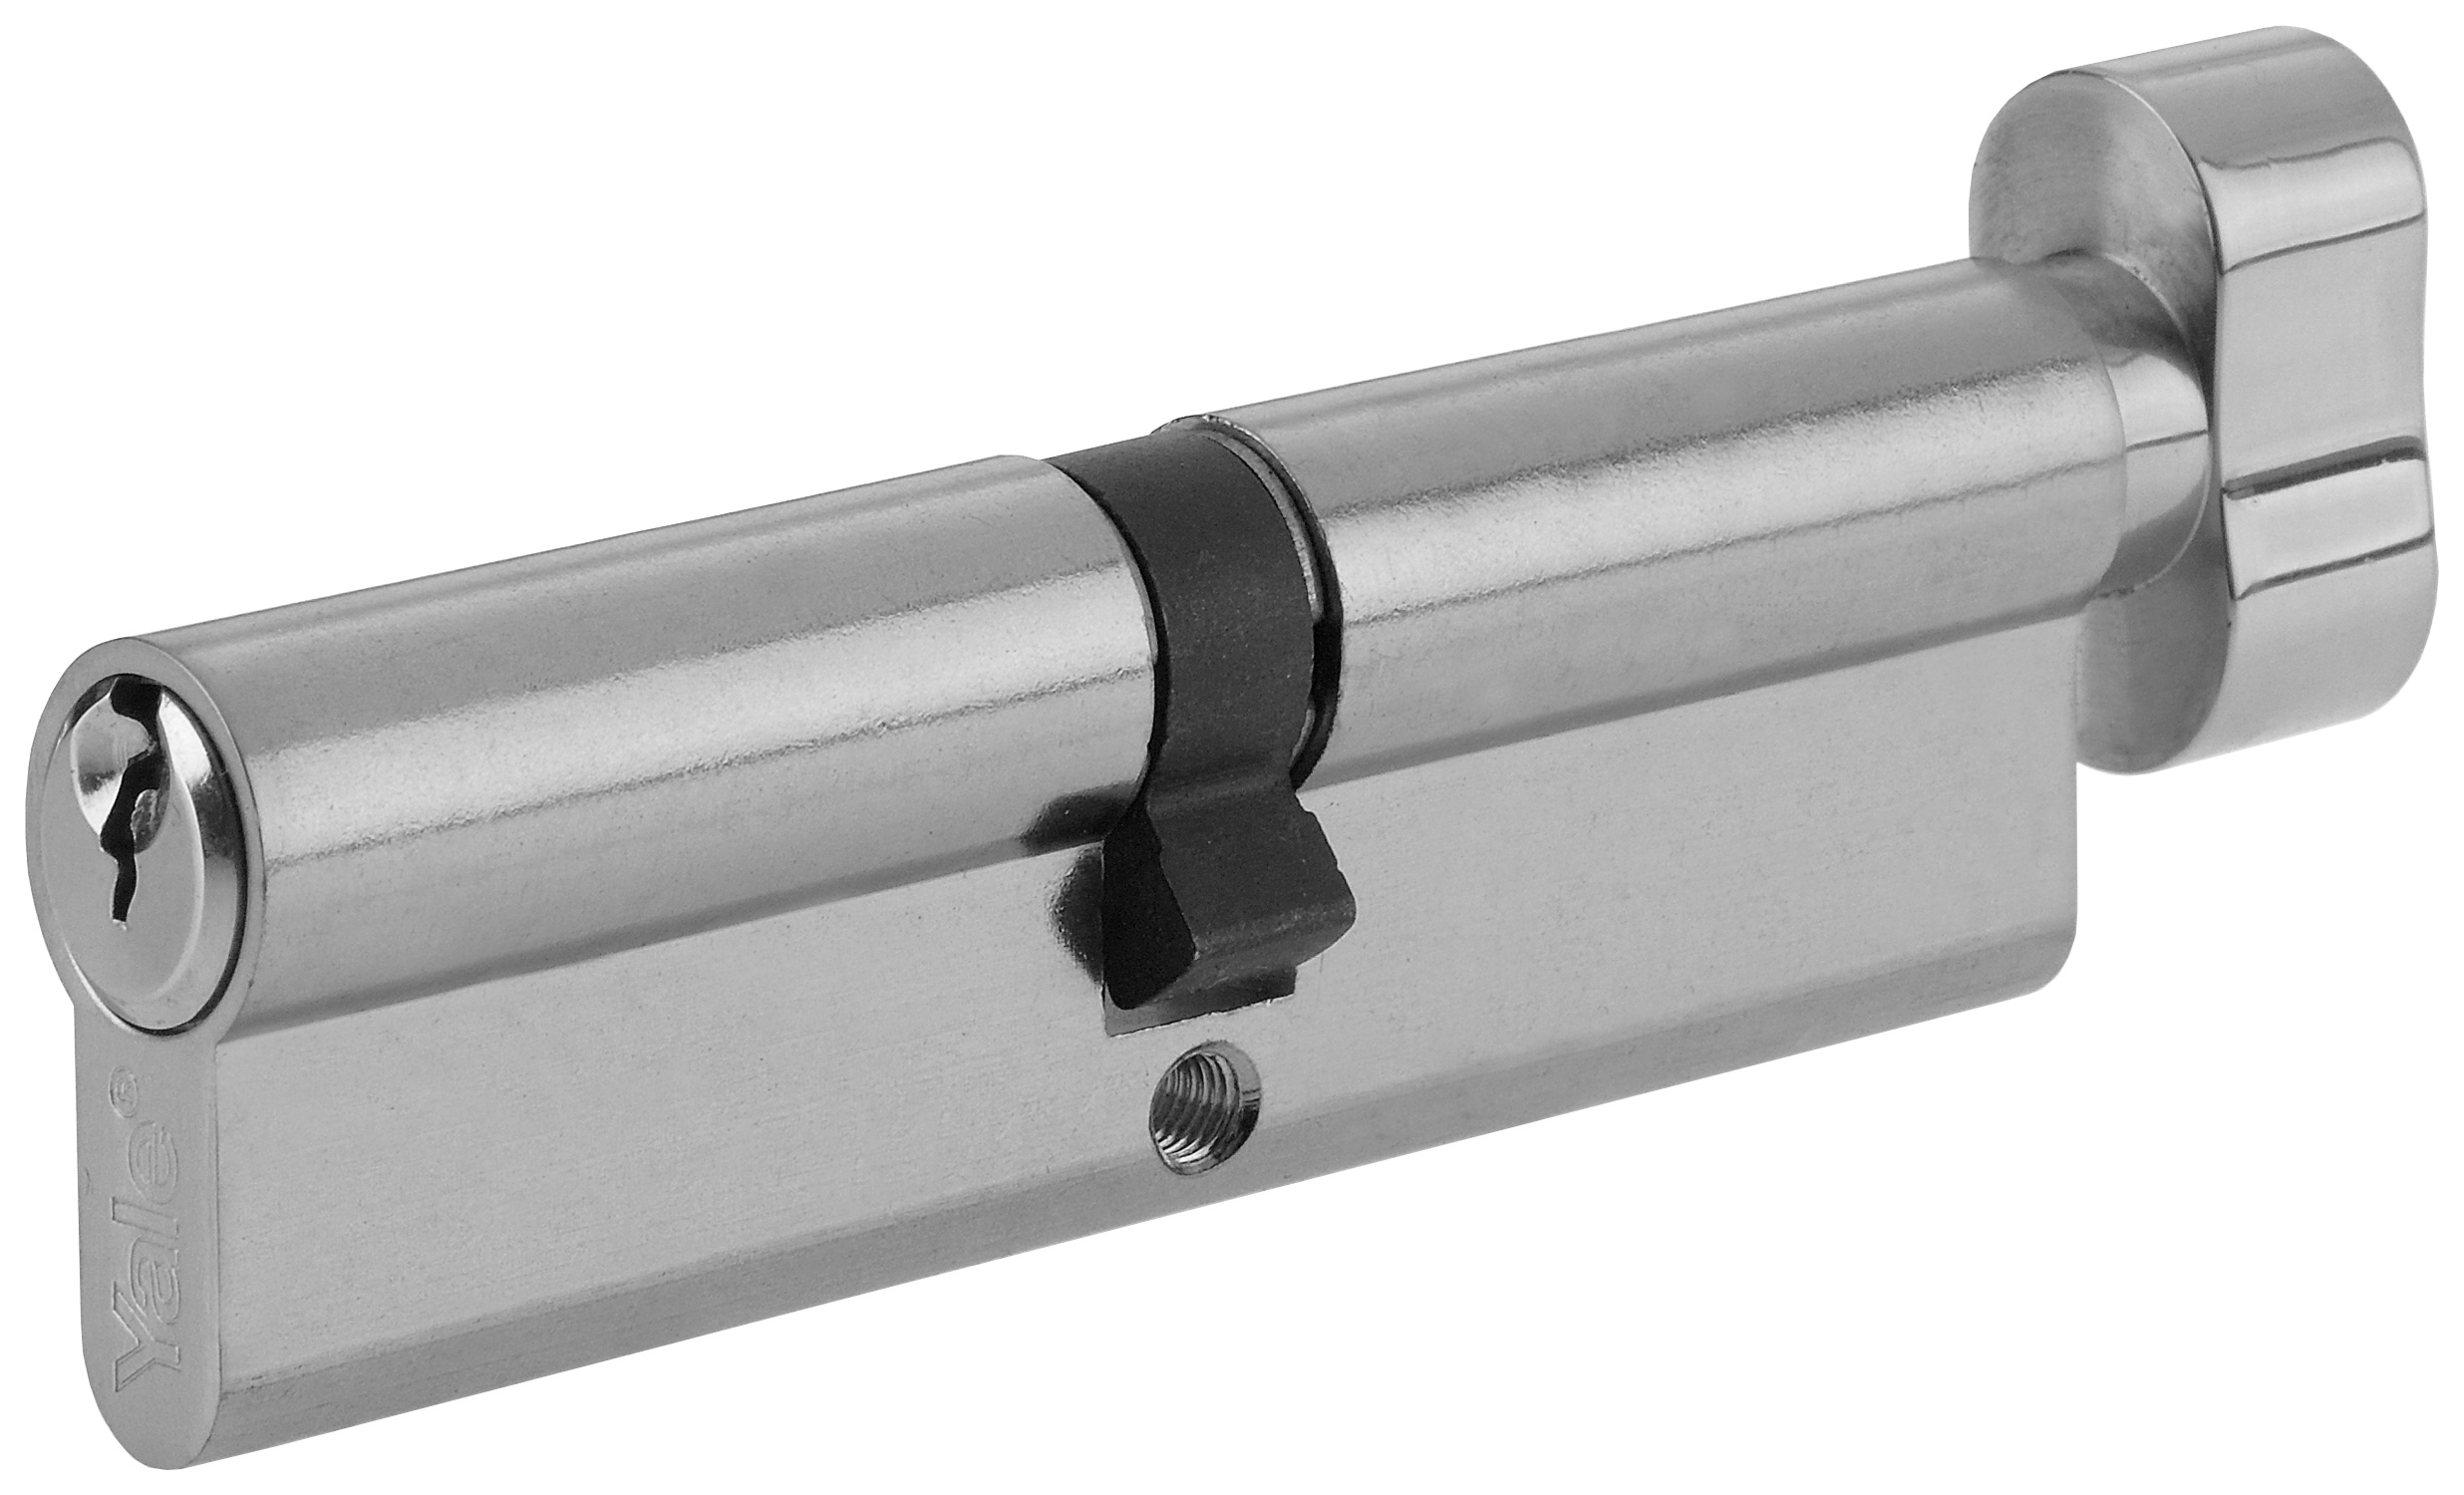 Yale P-ET3030-SNP Euro Profile Thumb Turn Nickel Cylinder Lock - 30 x 10 x30mm